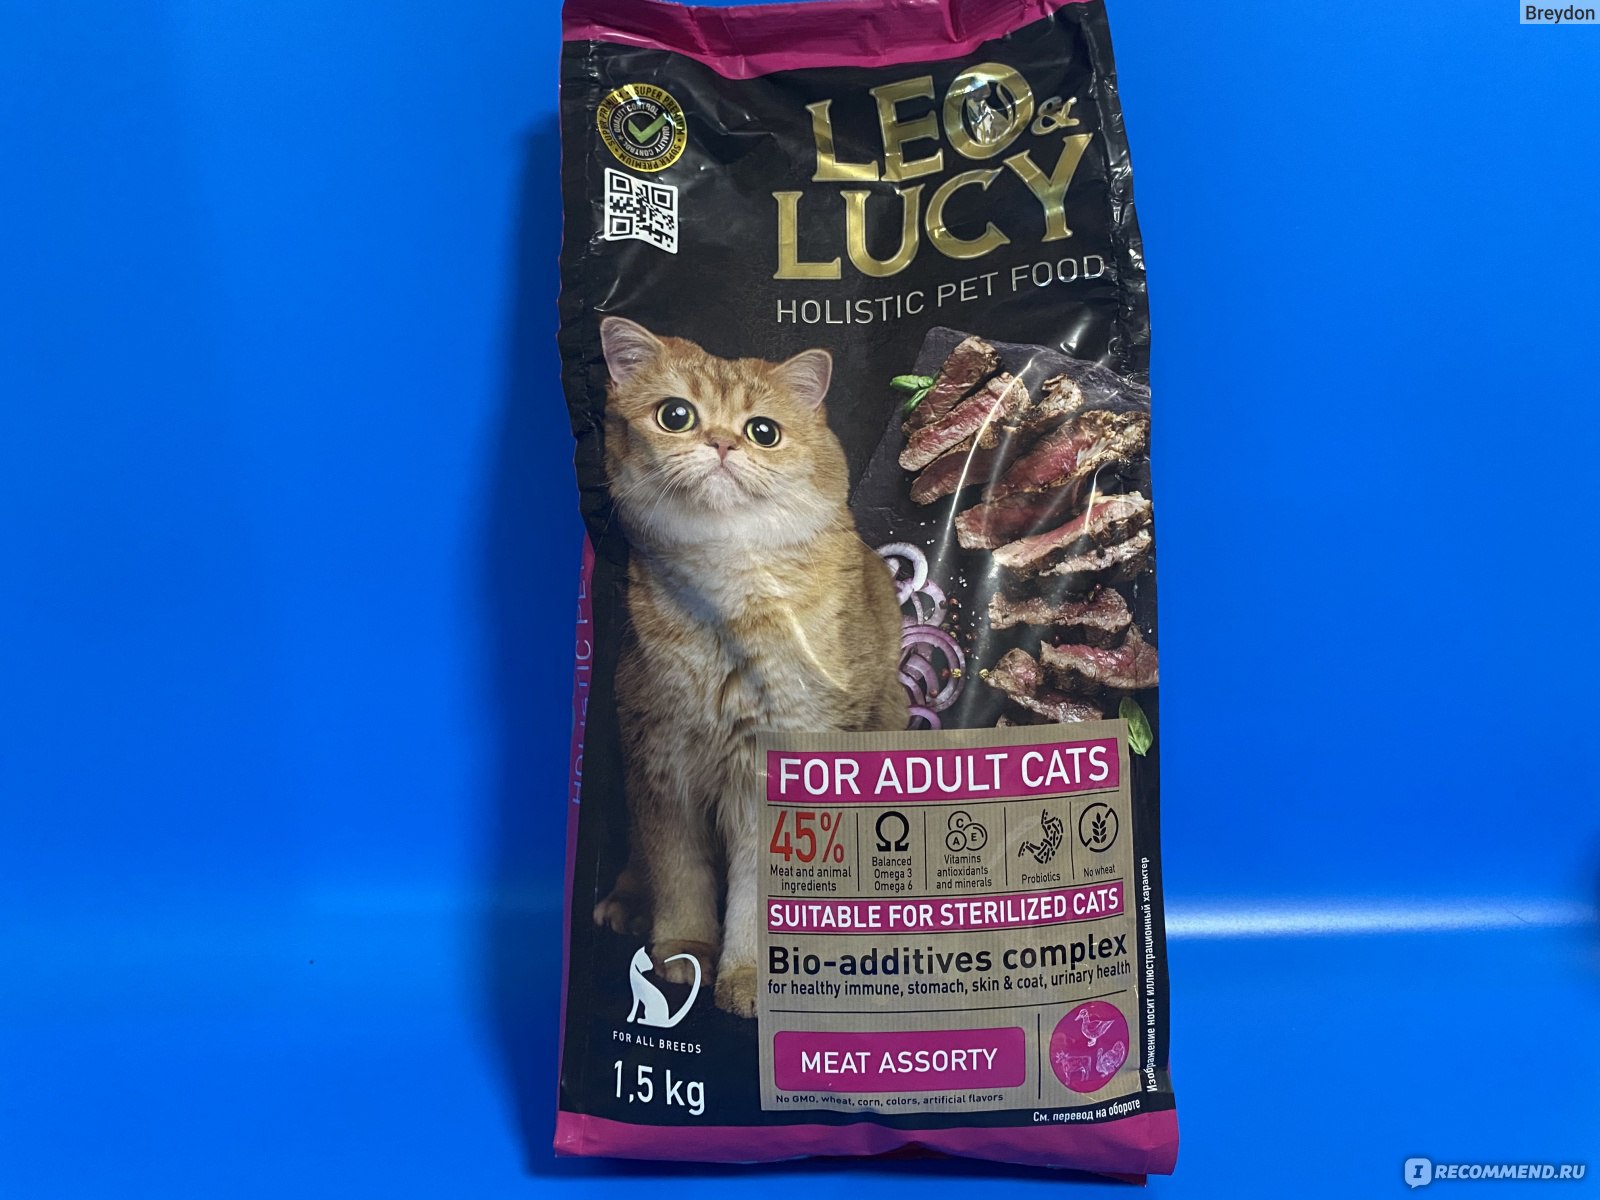 Холистик корма для кастрированных кошек. Leo Lucy корм. Корм для кошек. Холистик корм для кошек. Сухие корма для кошек.